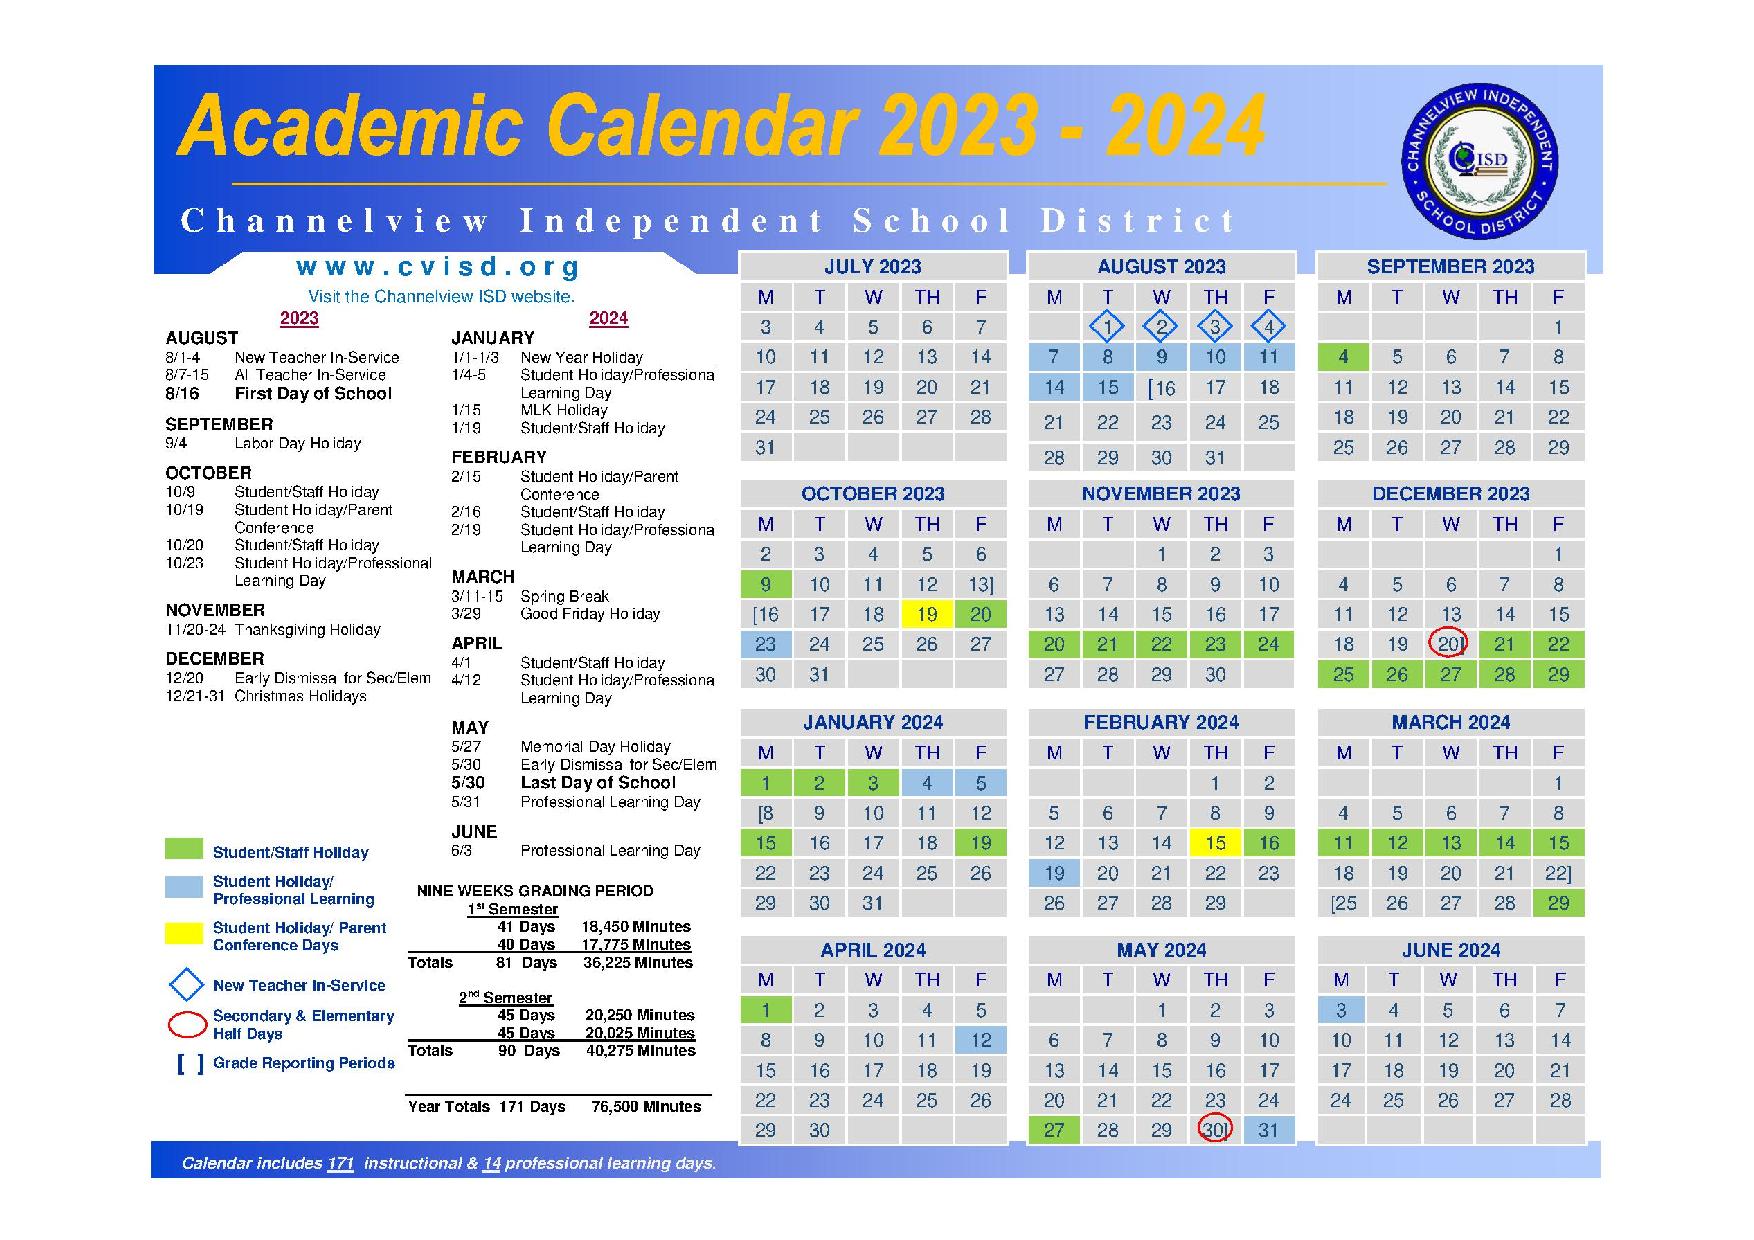 Channelview Independent School District Calendar 2024